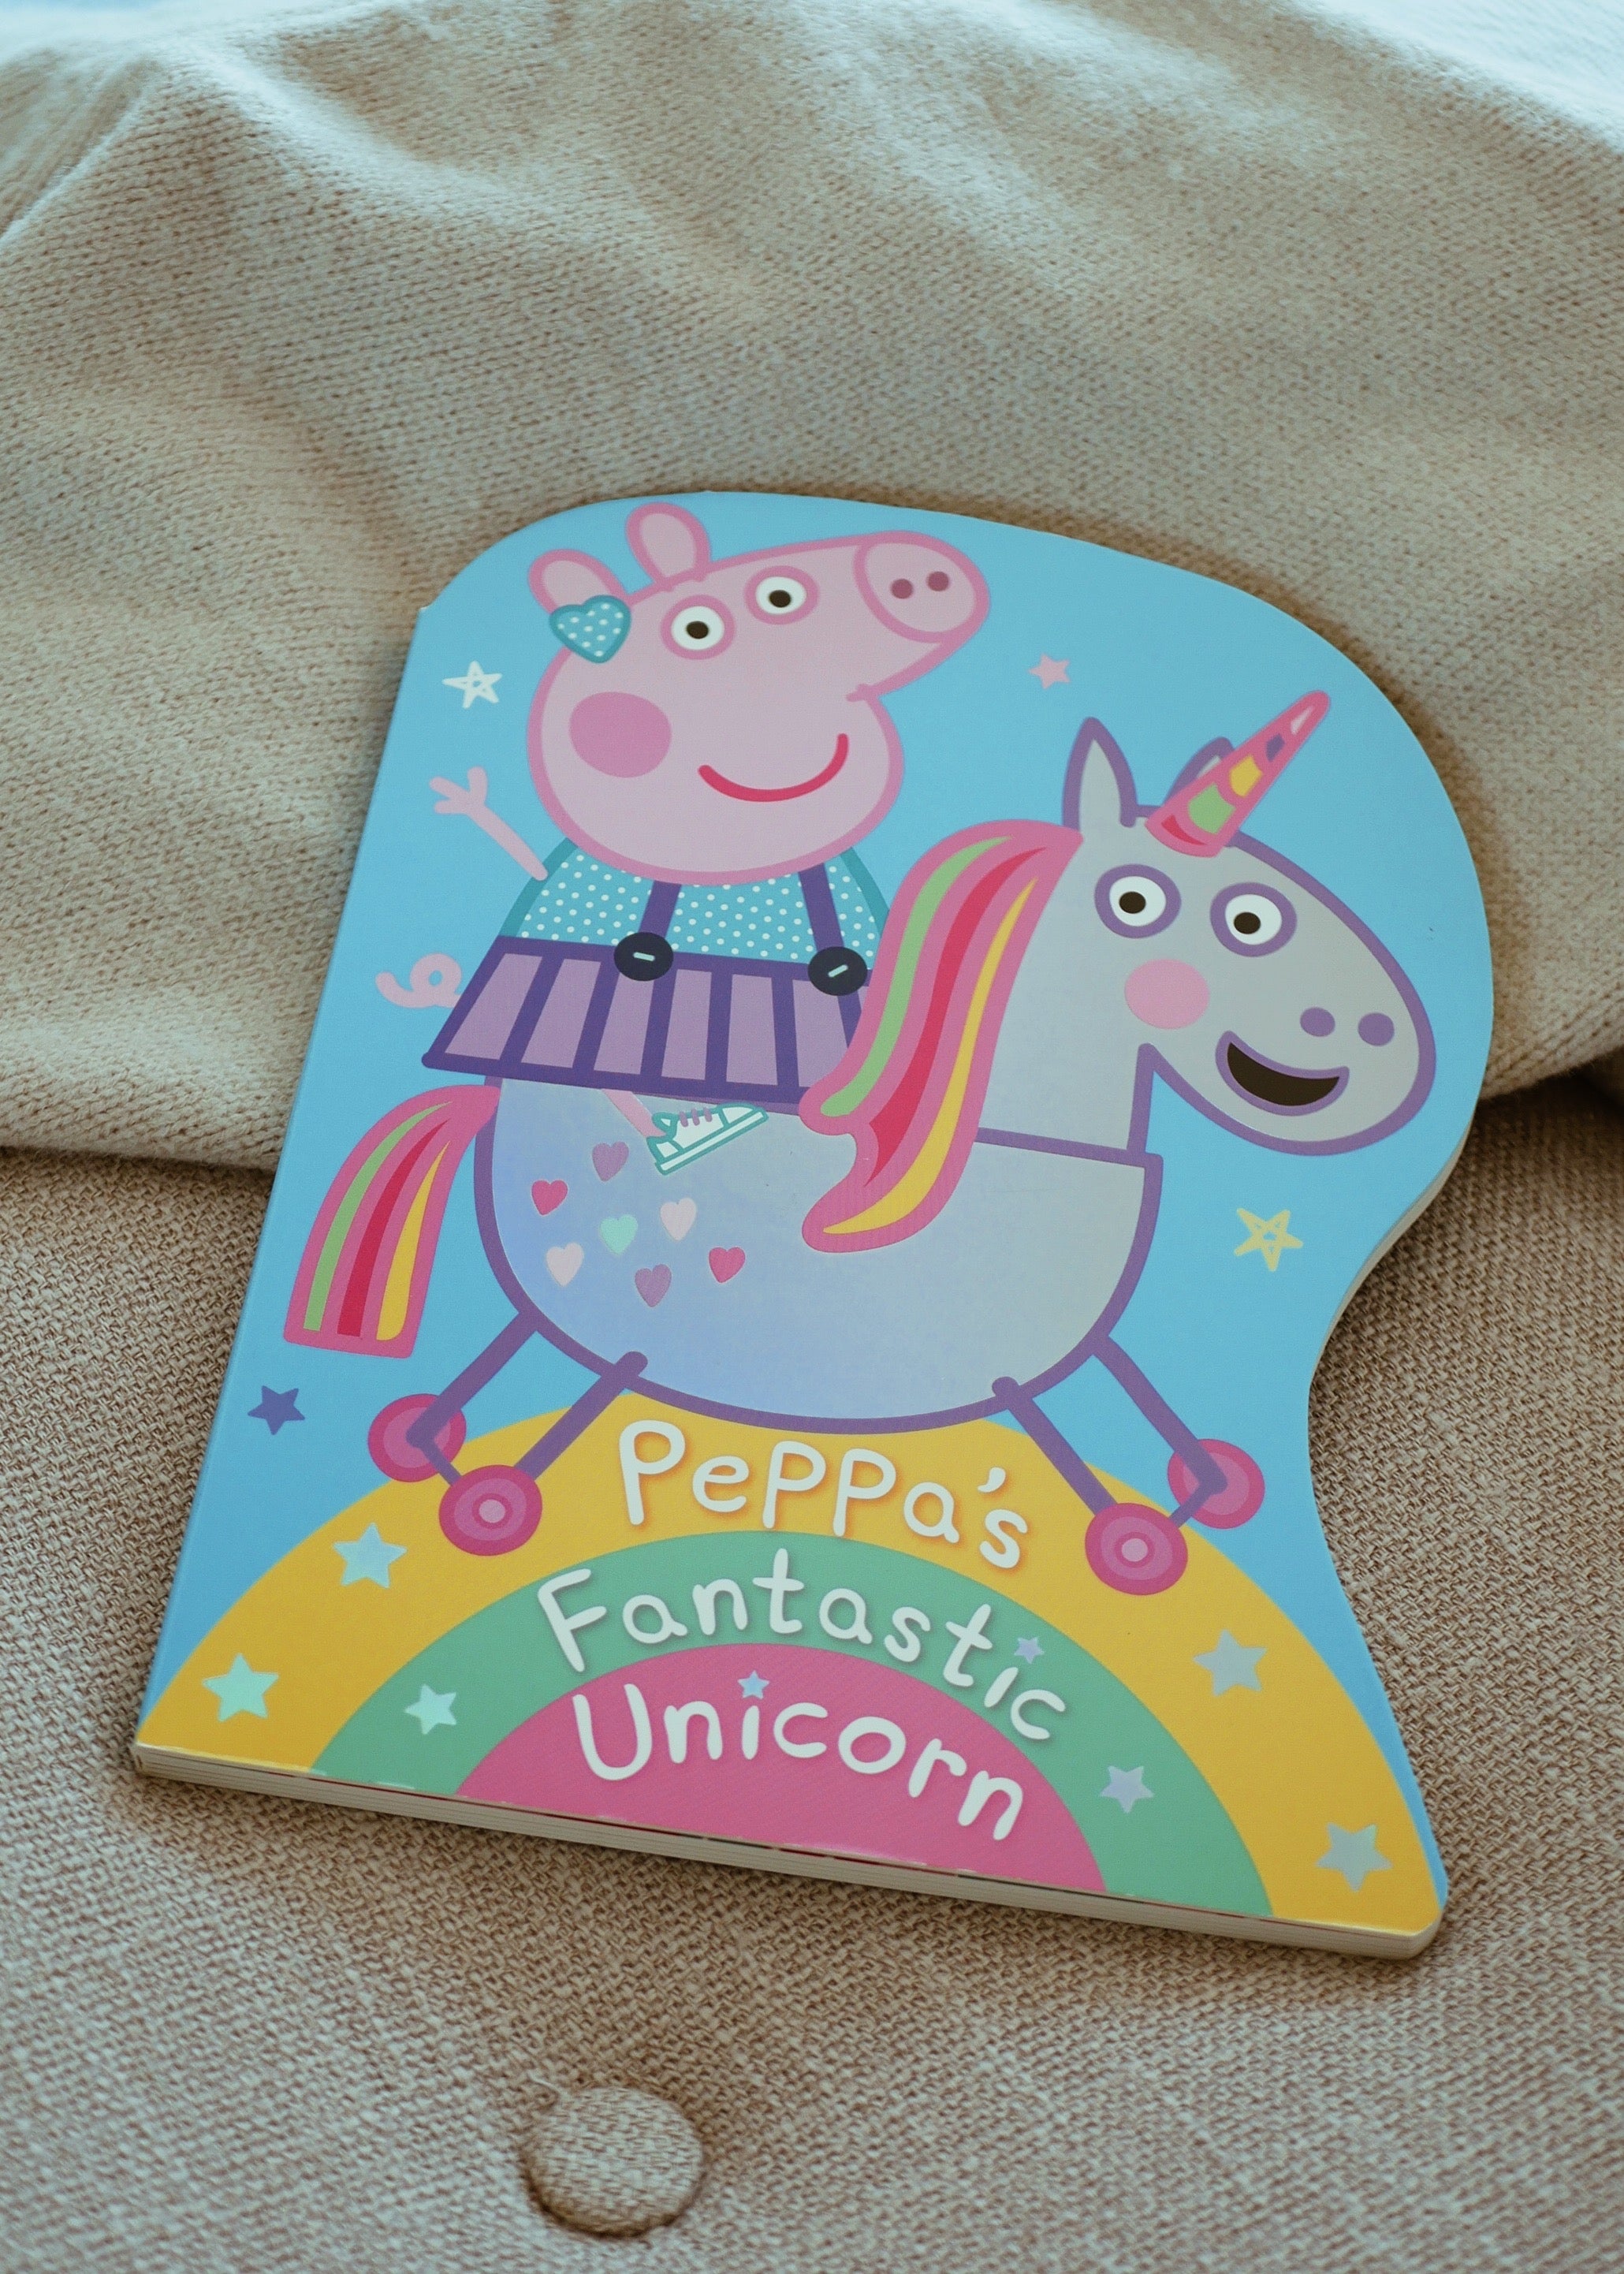 Peppa Pig - Peppa's Fantastic Unicorn